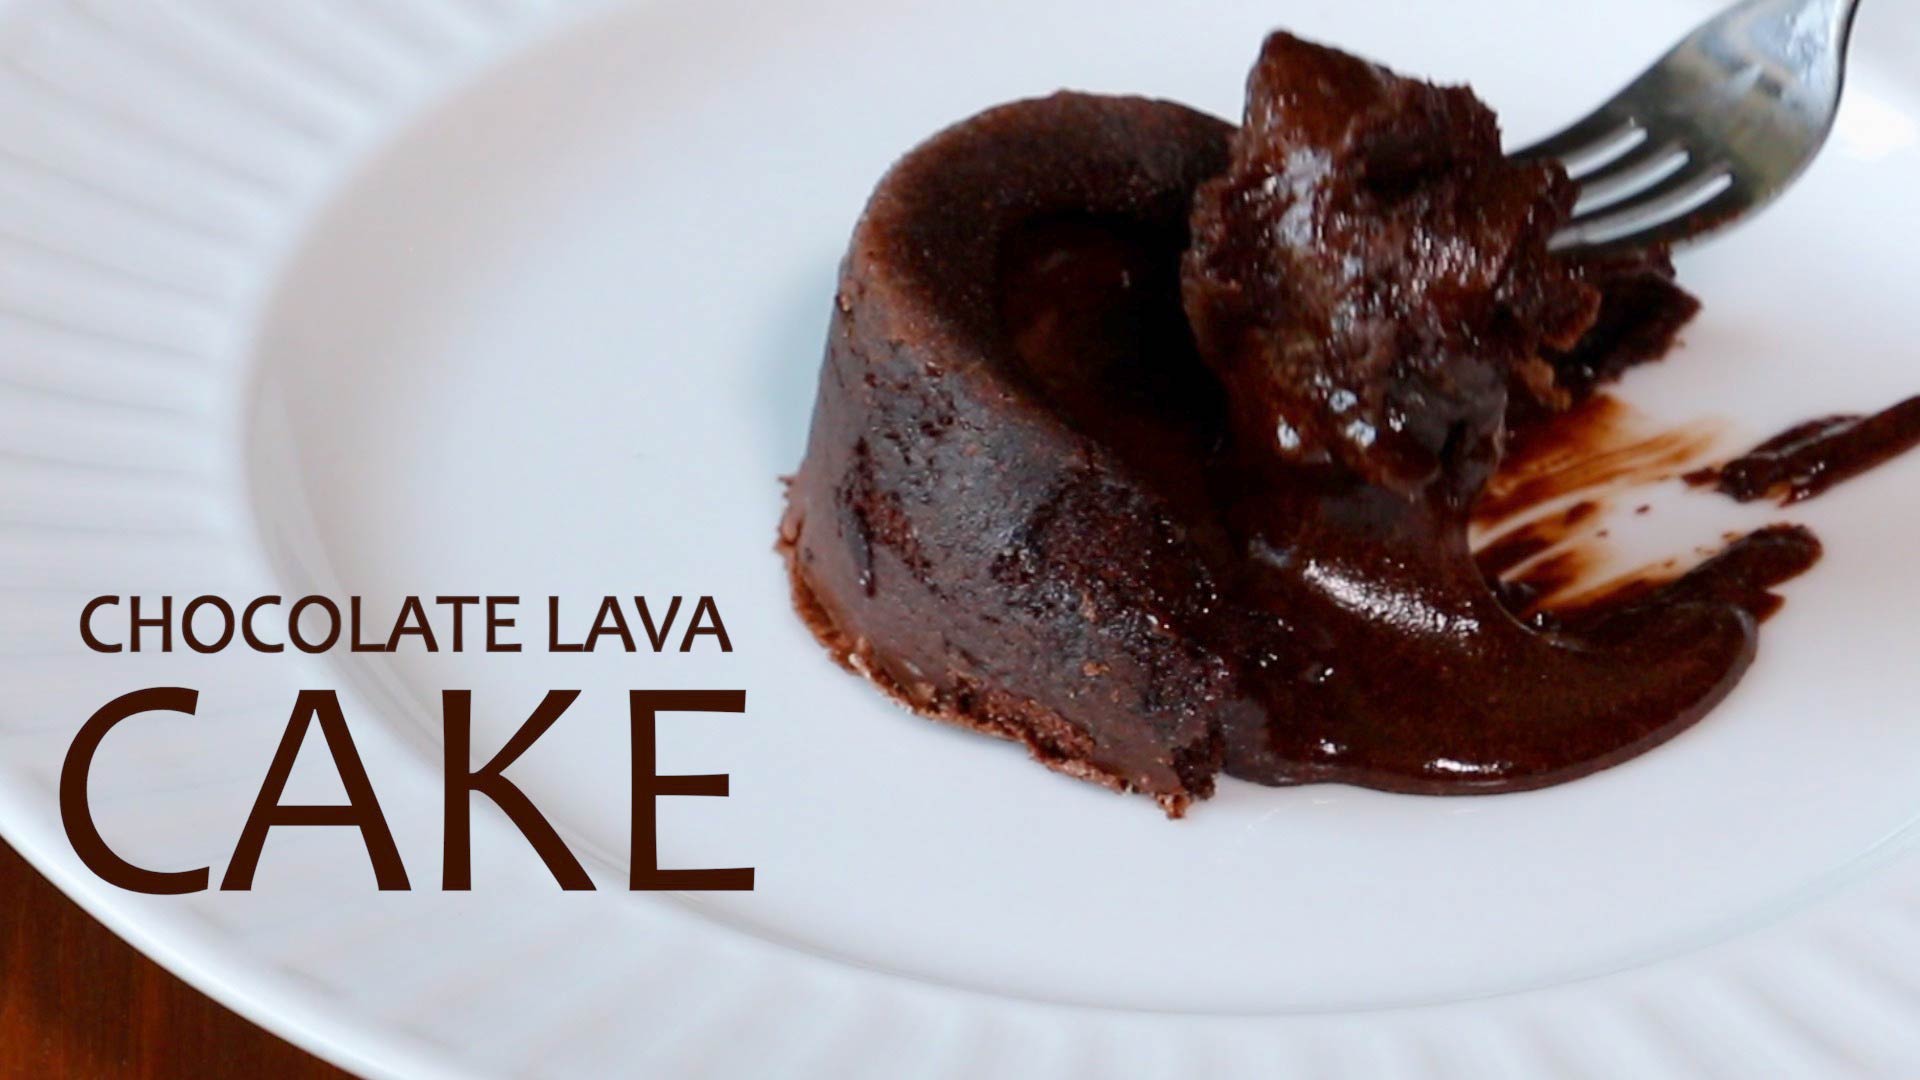 Chocolate Lava Cake Recipe | Make Molten Chocolate Cake at Home